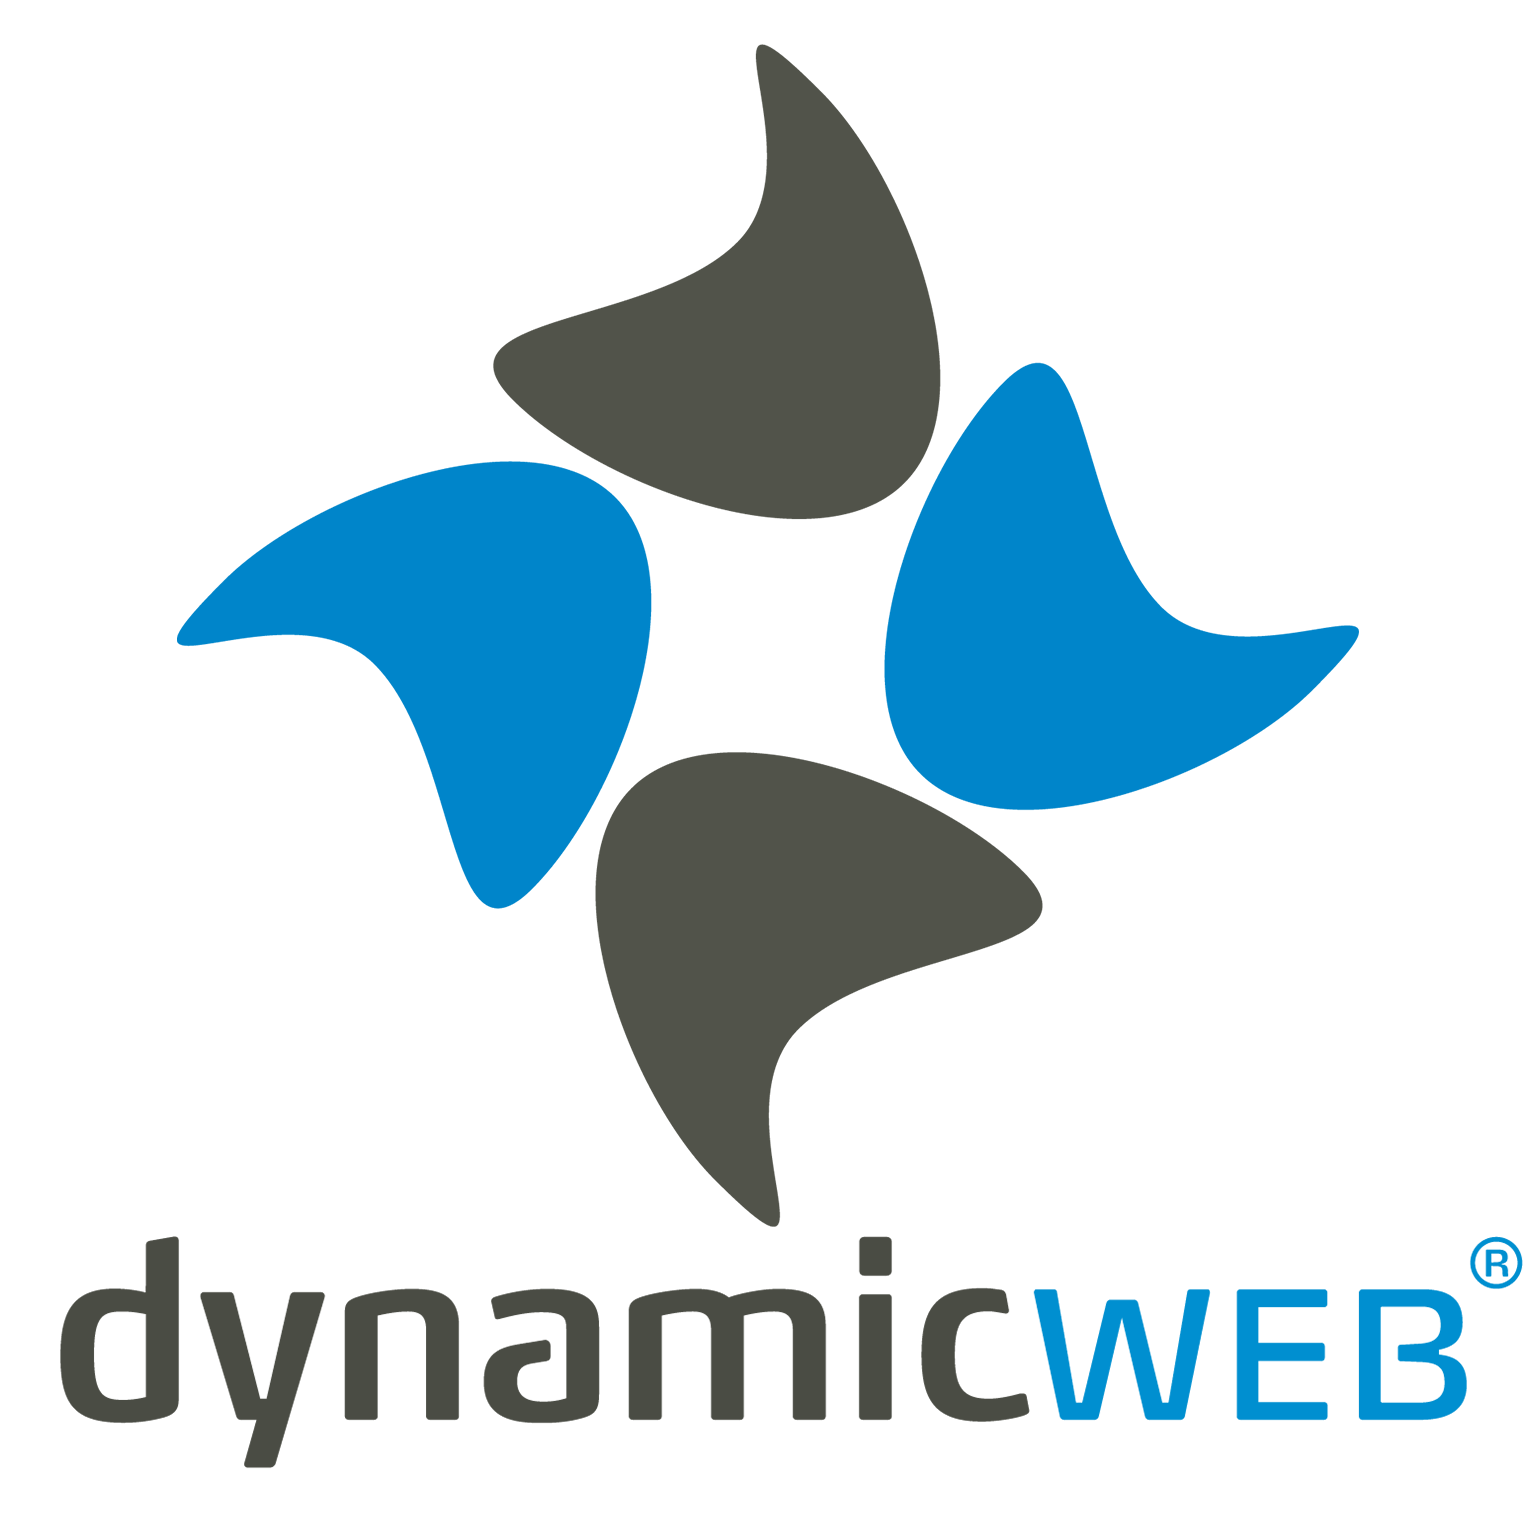 Dynamicweb Software